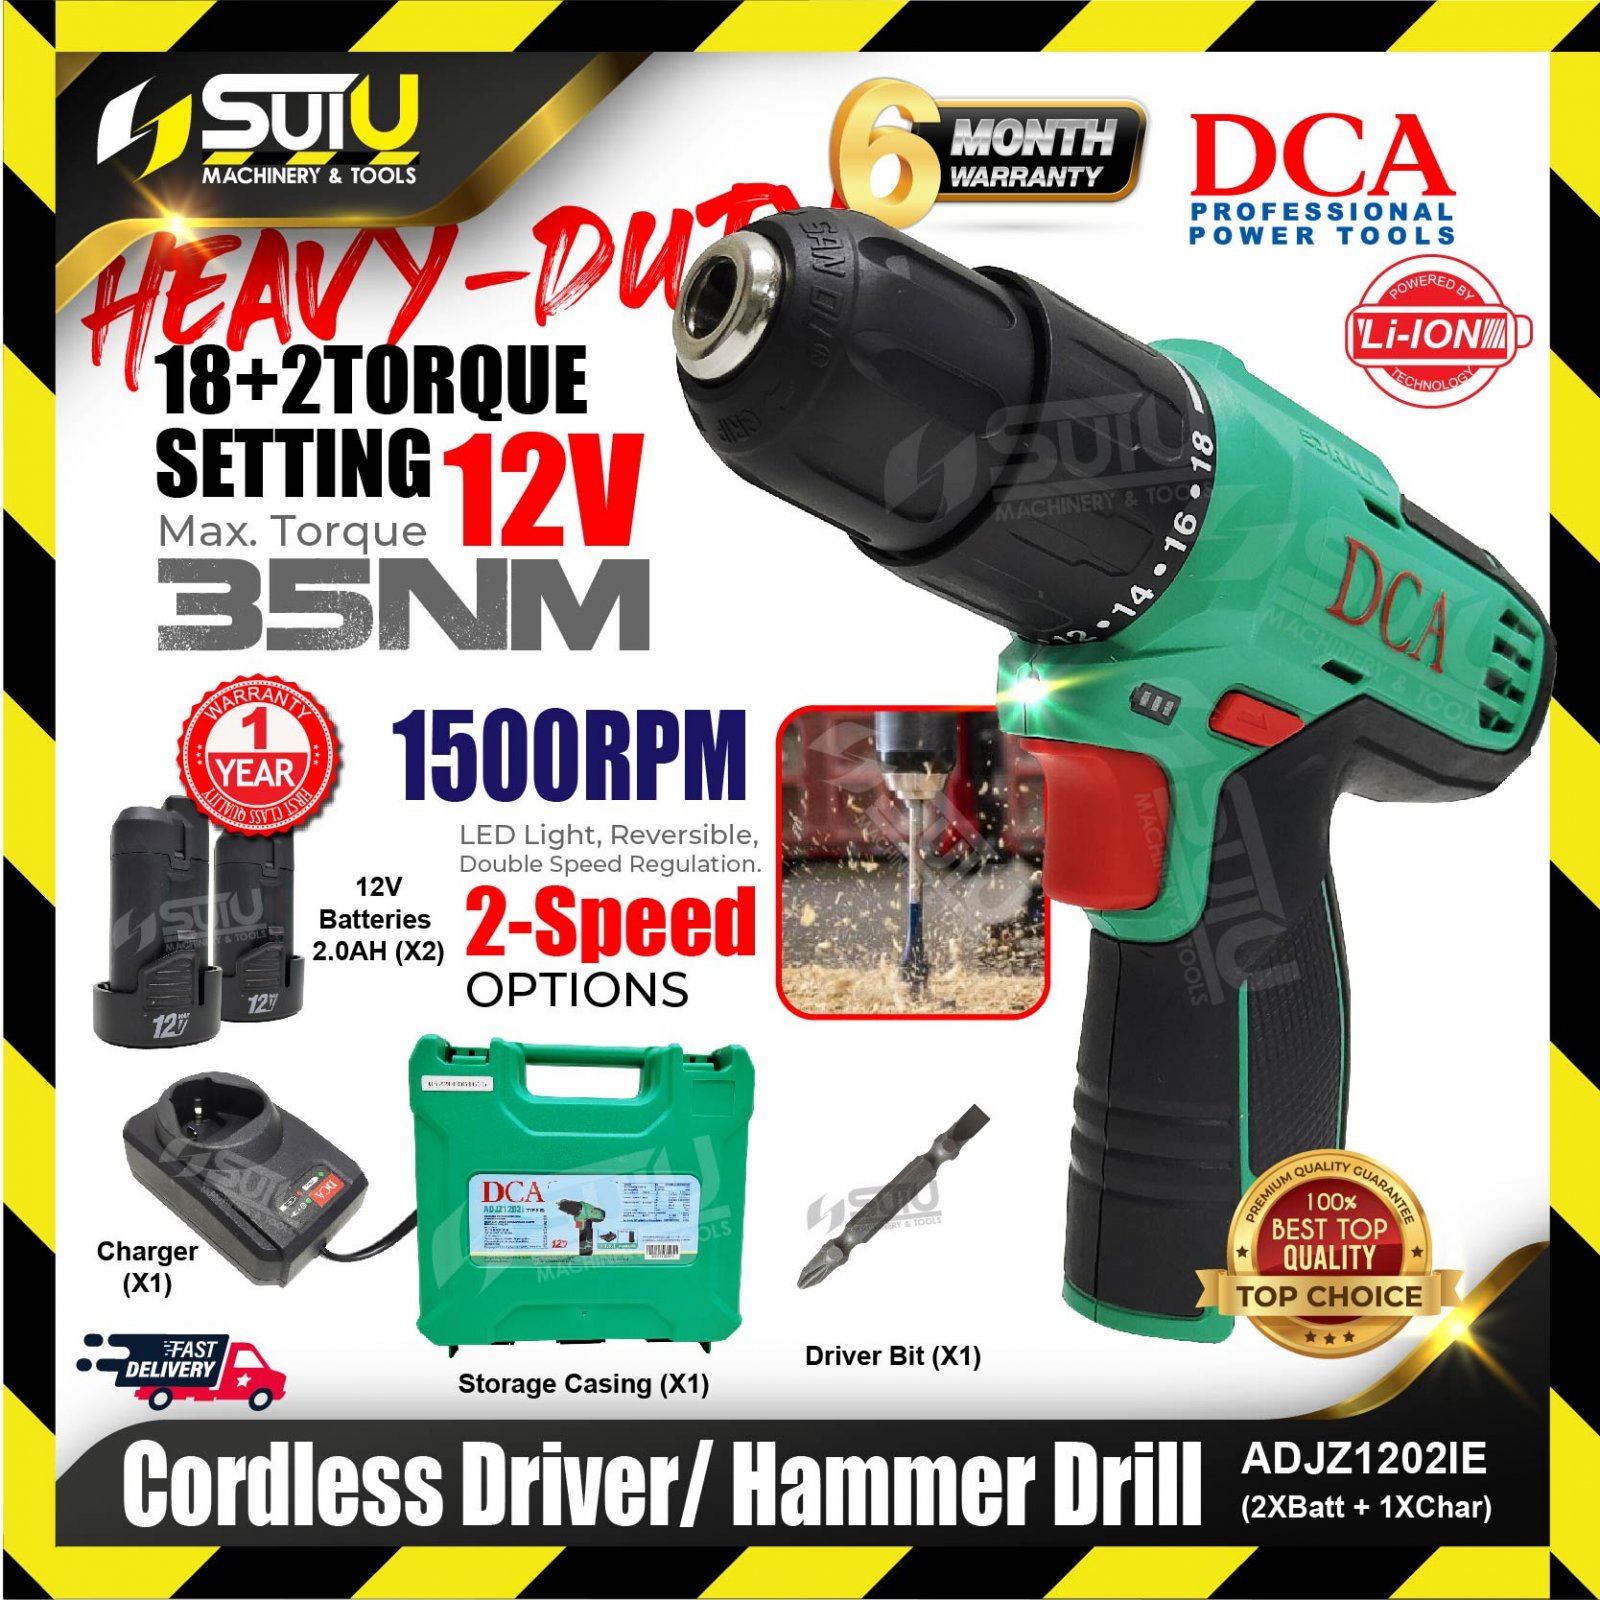 DCA ADJZ1202IE 12V 35NM Cordless Driver / Hammer Drill 1500RPM w